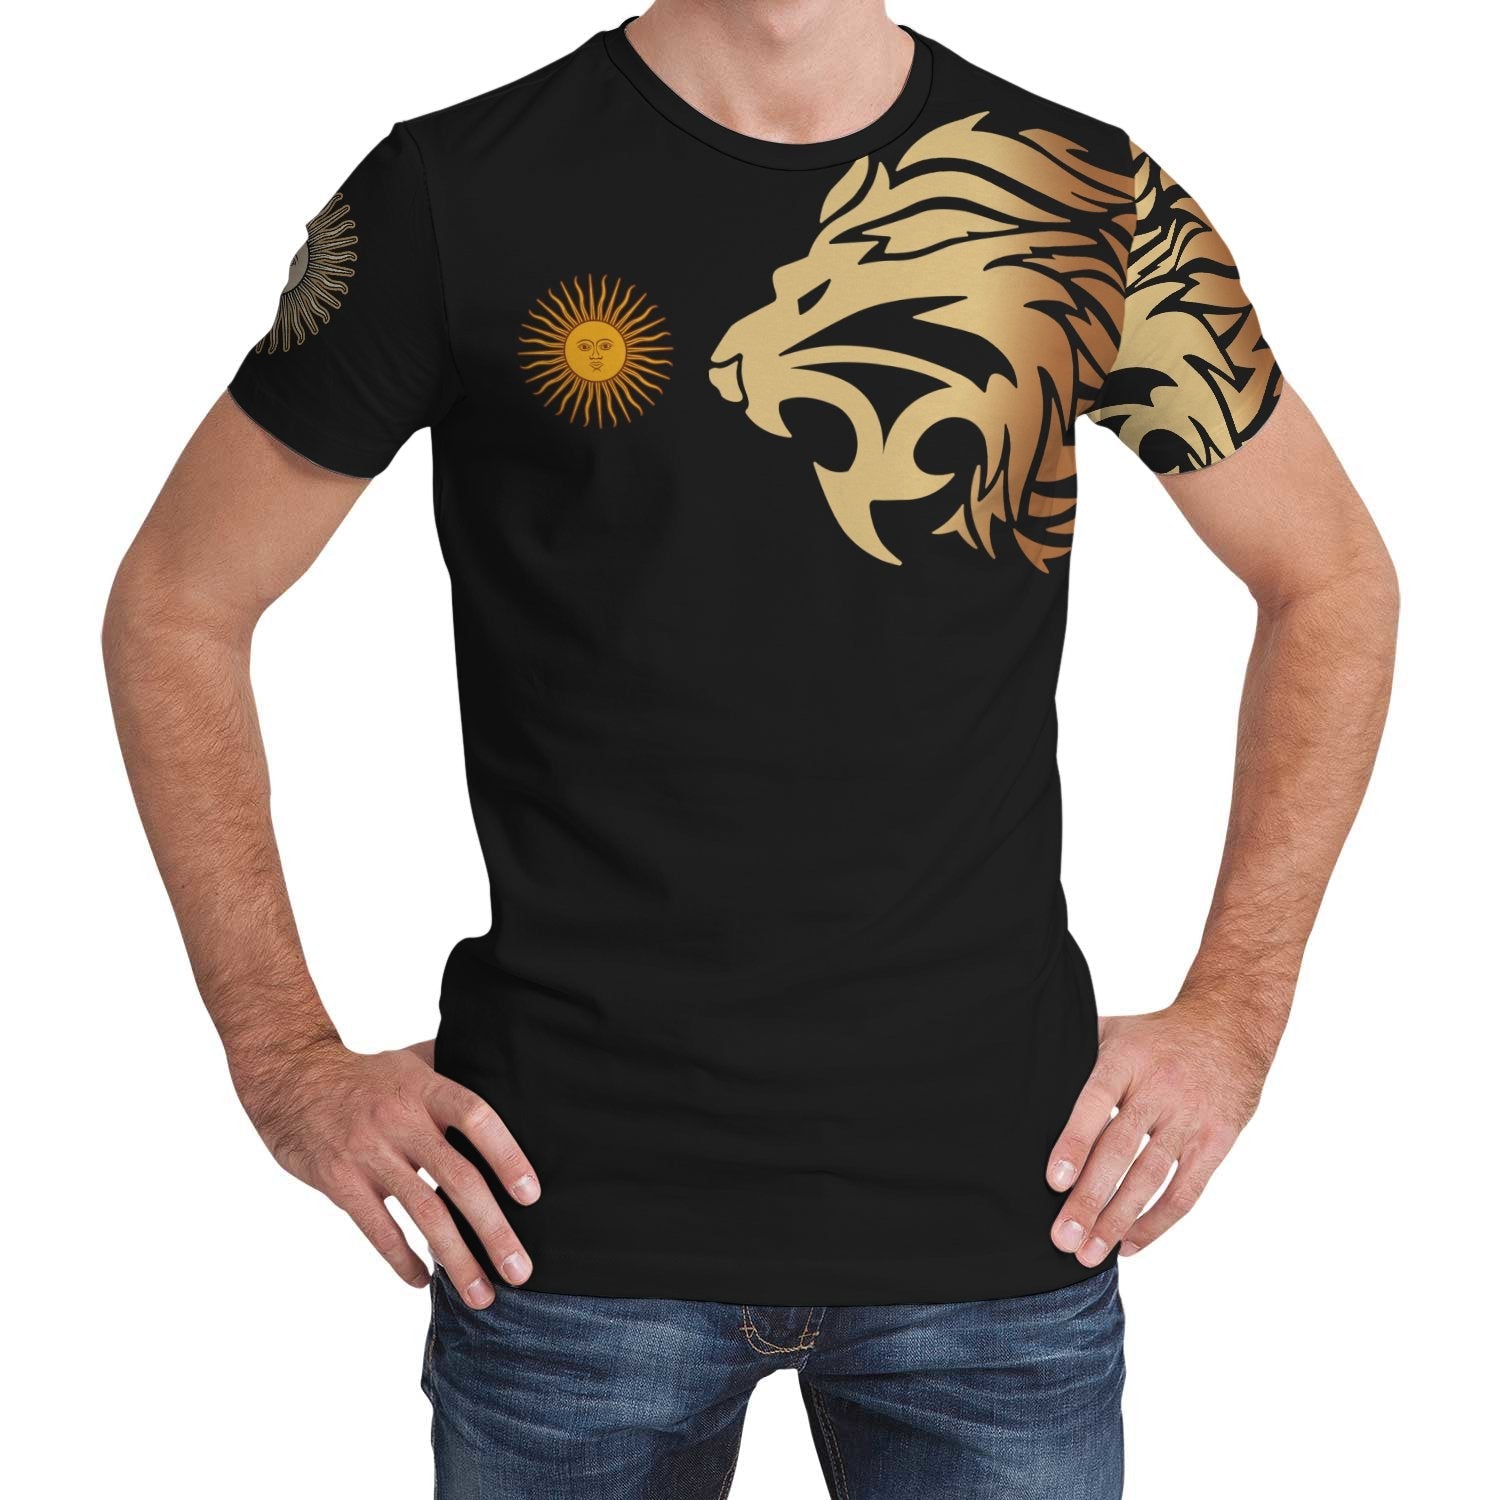 argentina-t-shirts-lion-style